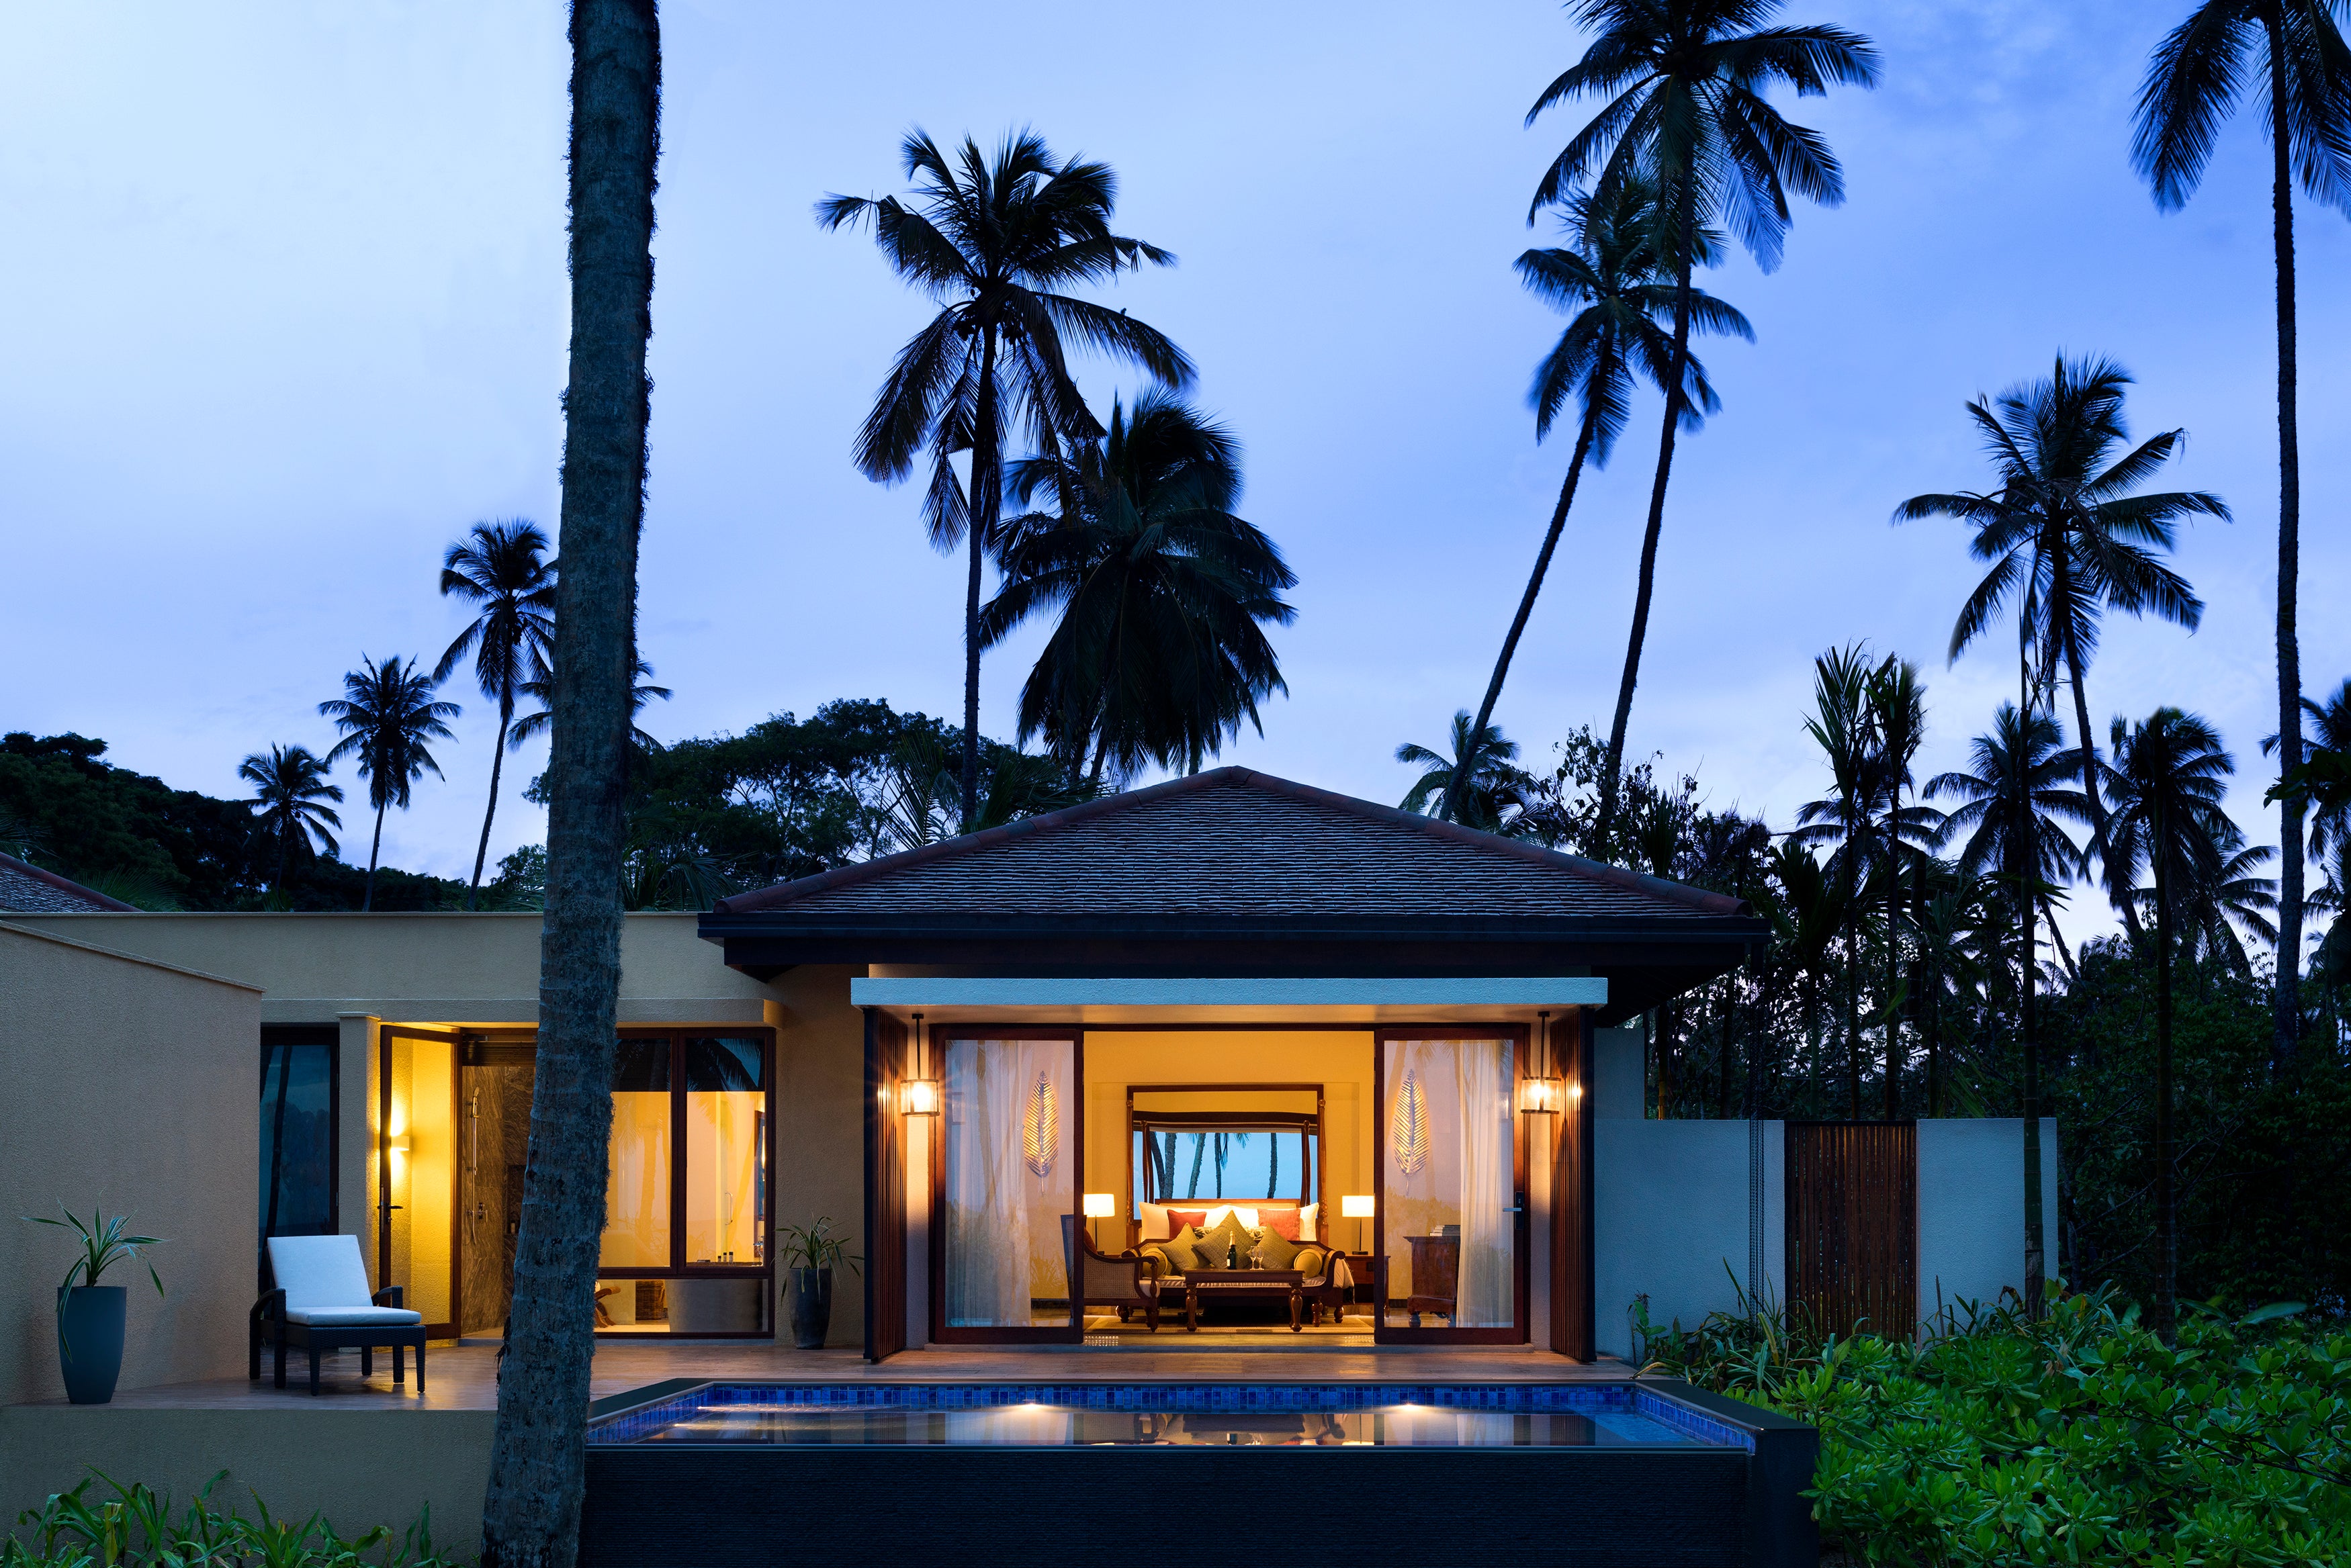 The Anantara resort overlooks the Indian ocean